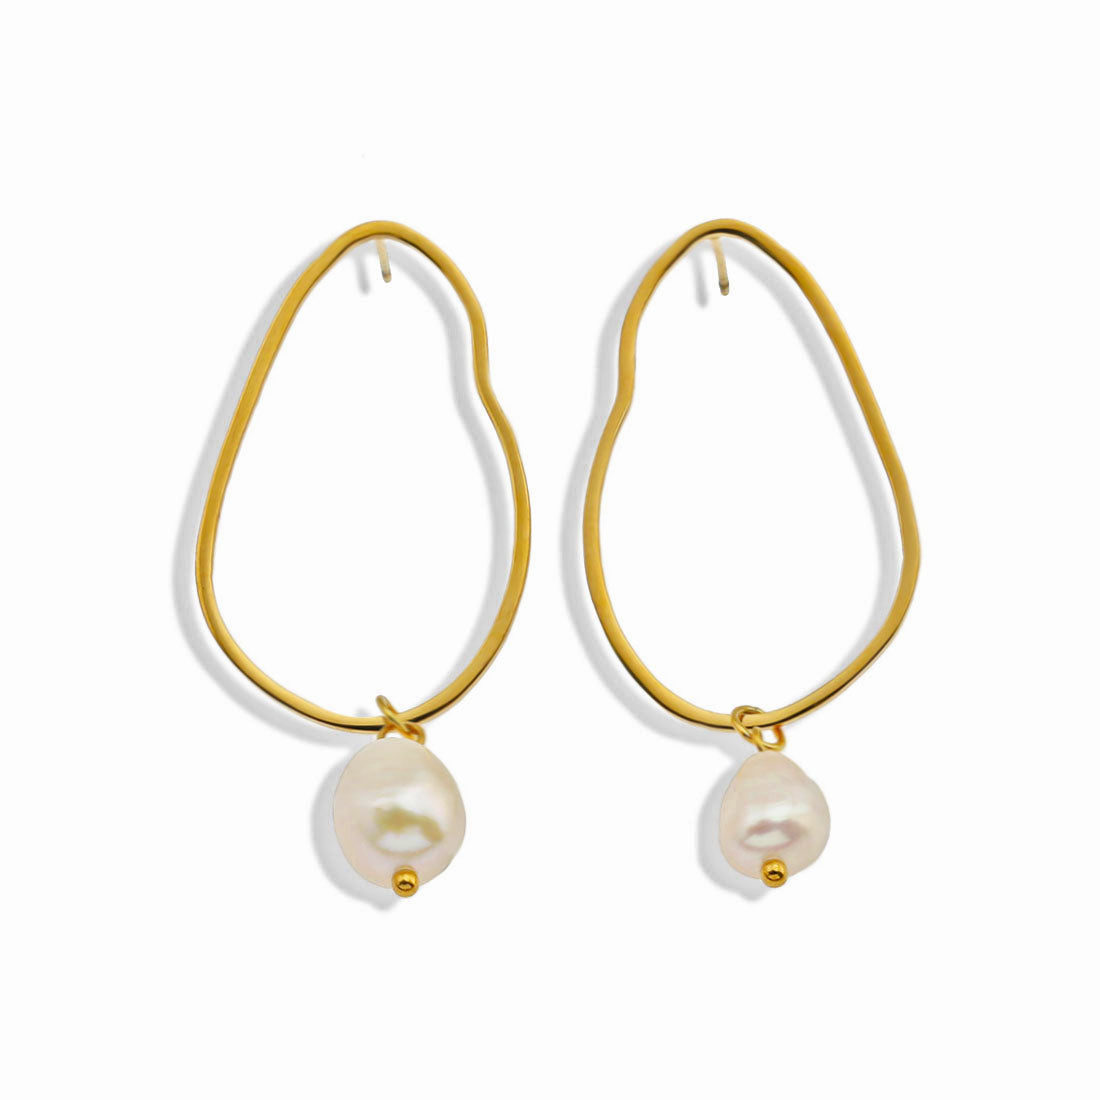 Buy Keshi Pearls Drop Stud Earrings in Sterling Silver, Baroque Pearl,  Genuine Freshwater Pearls Earrings, Simple and Minimalist, Contemporary  Online in India - Etsy